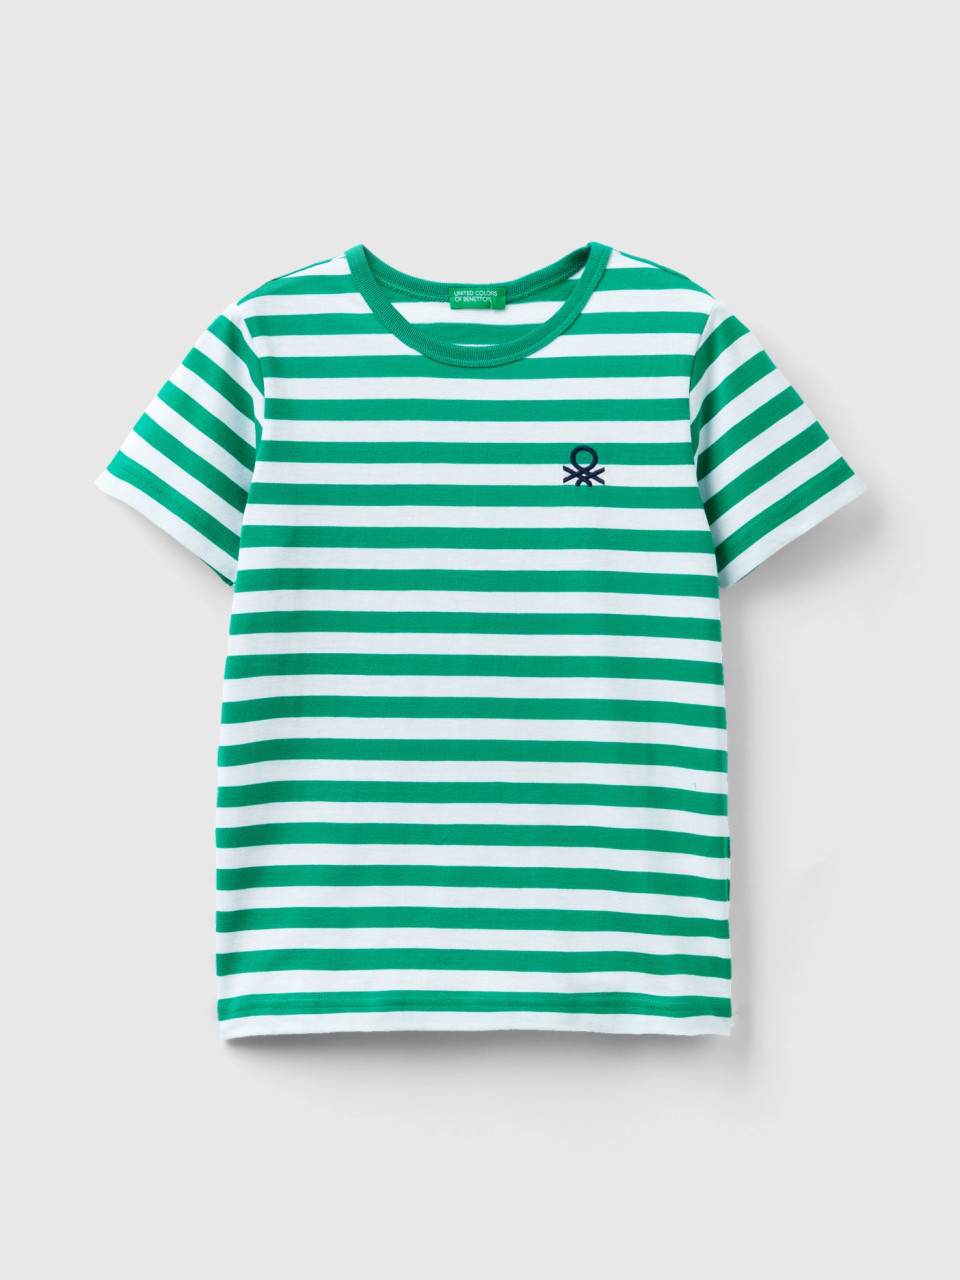 Benetton, Striped 100% Cotton T-shirt, Green, Kids